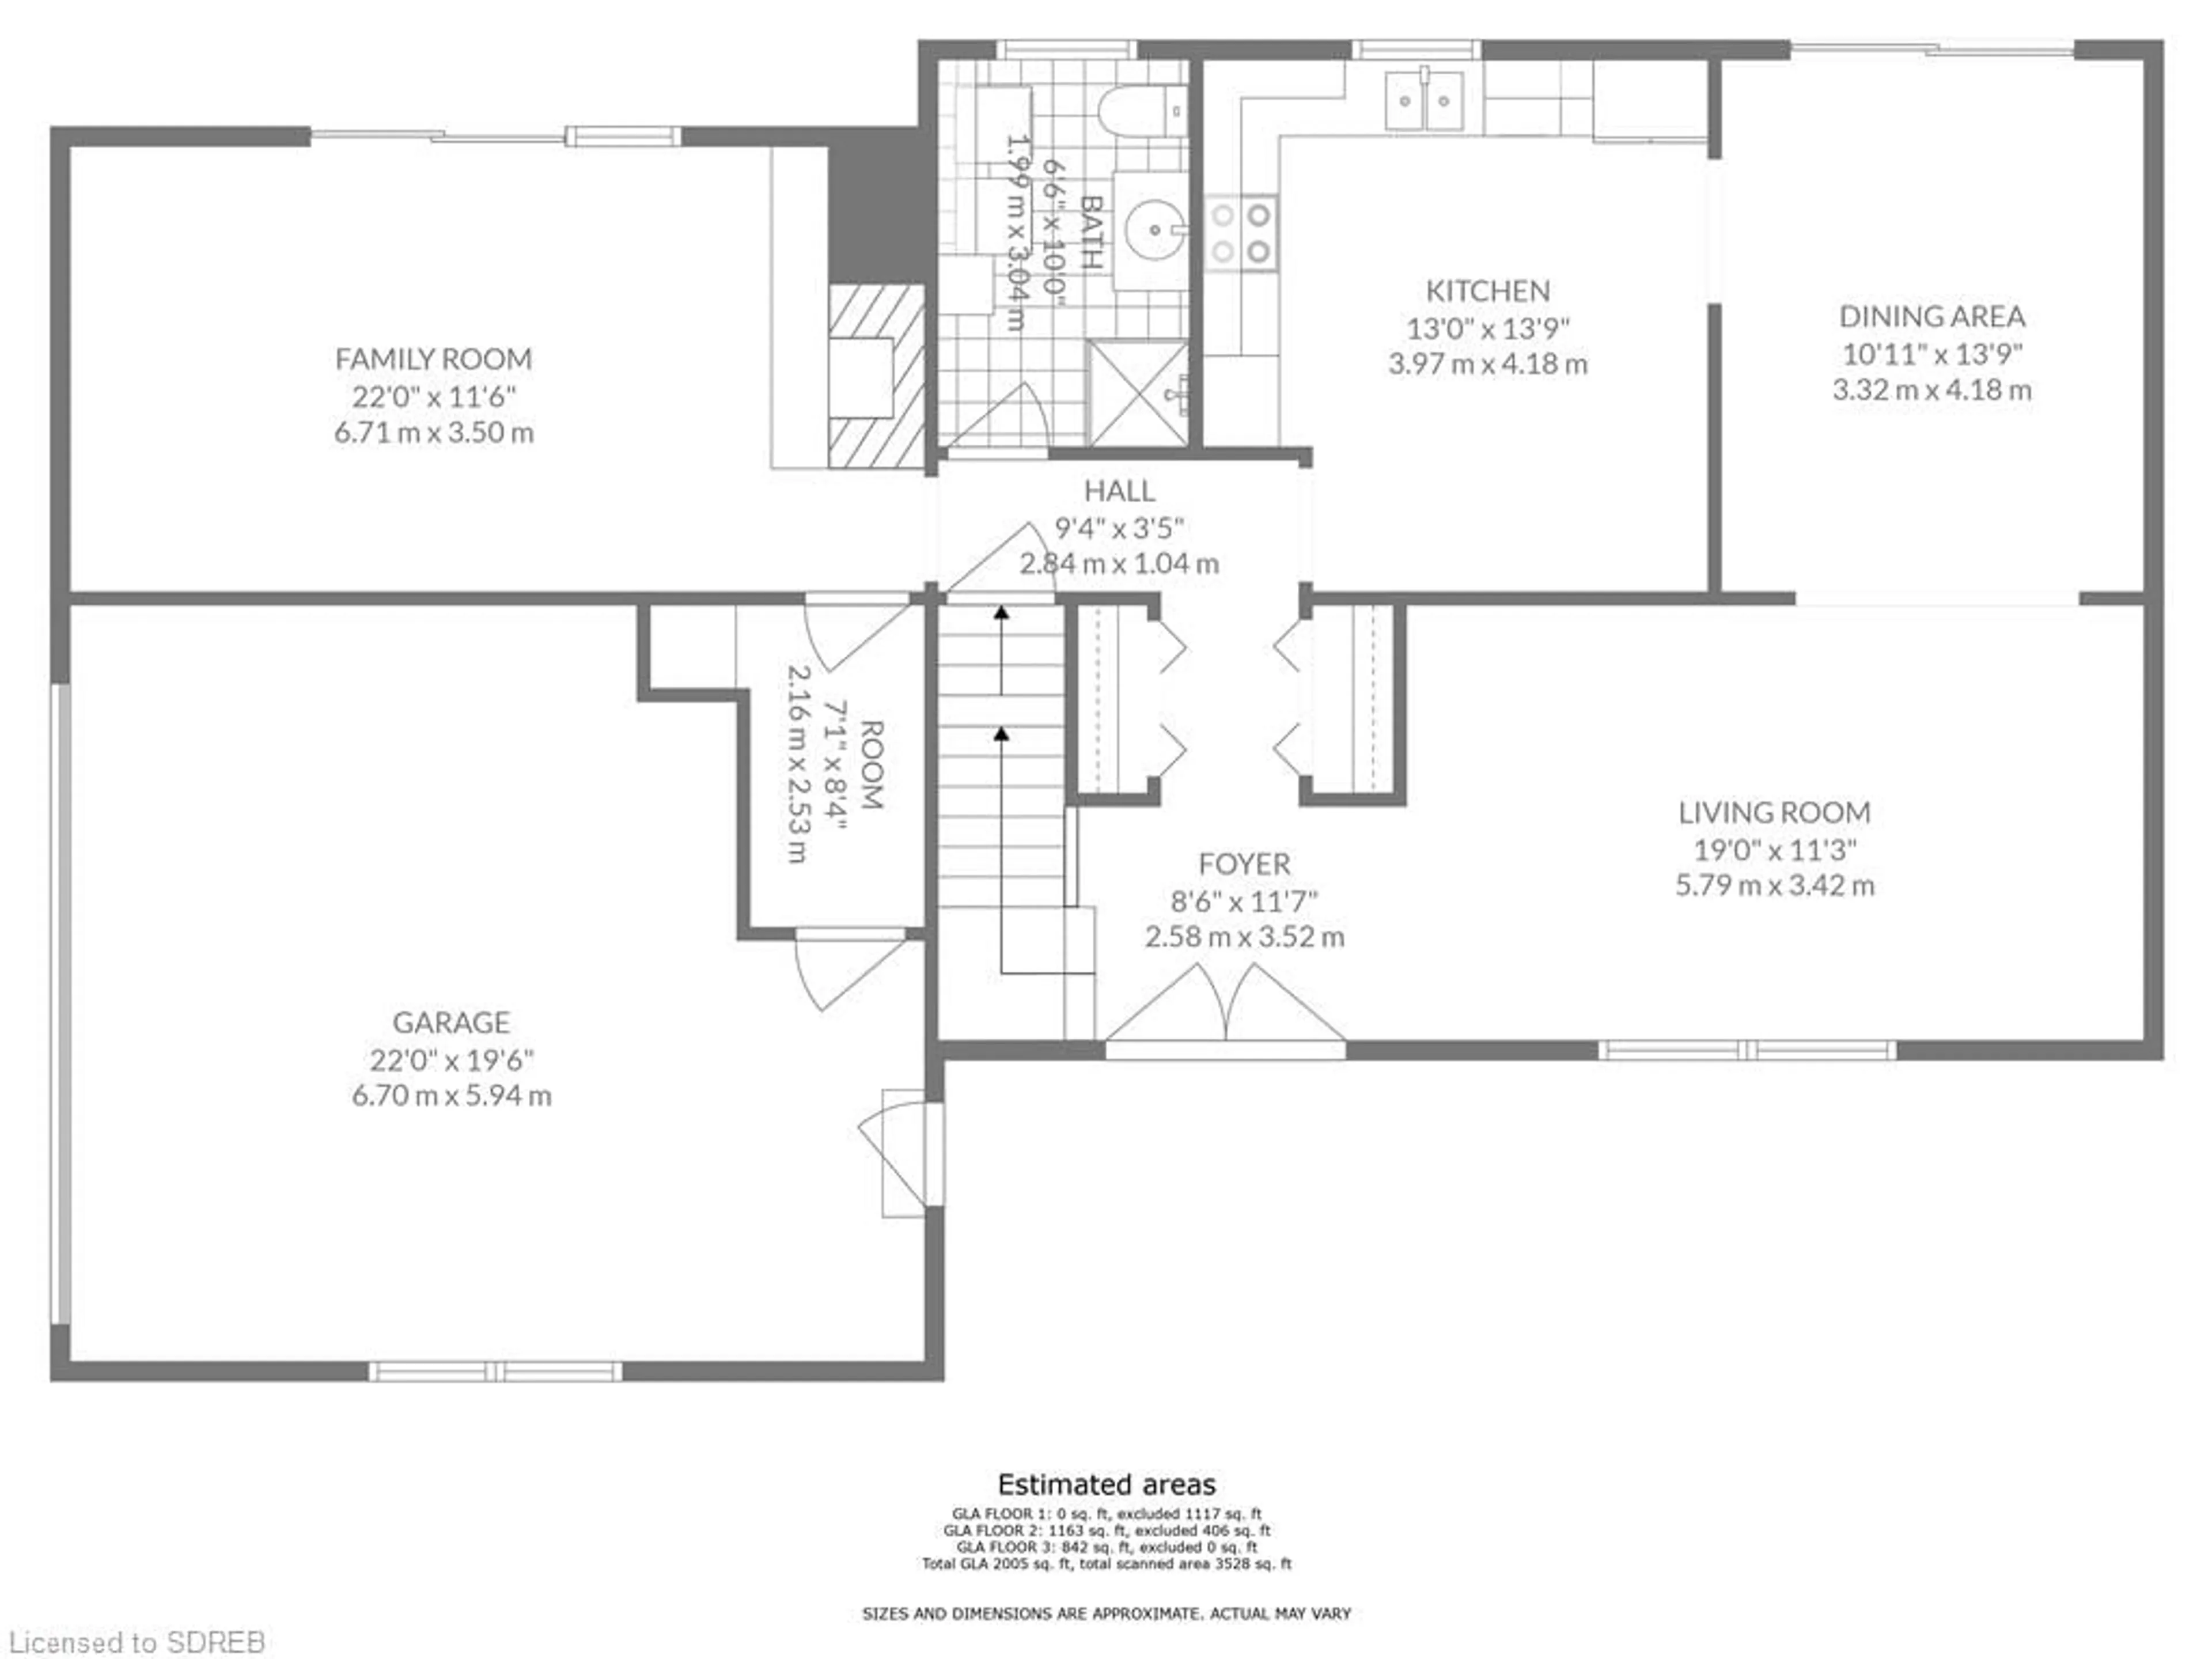 Floor plan for 130 Hillside Ave, Delhi Ontario N4B 1Y7